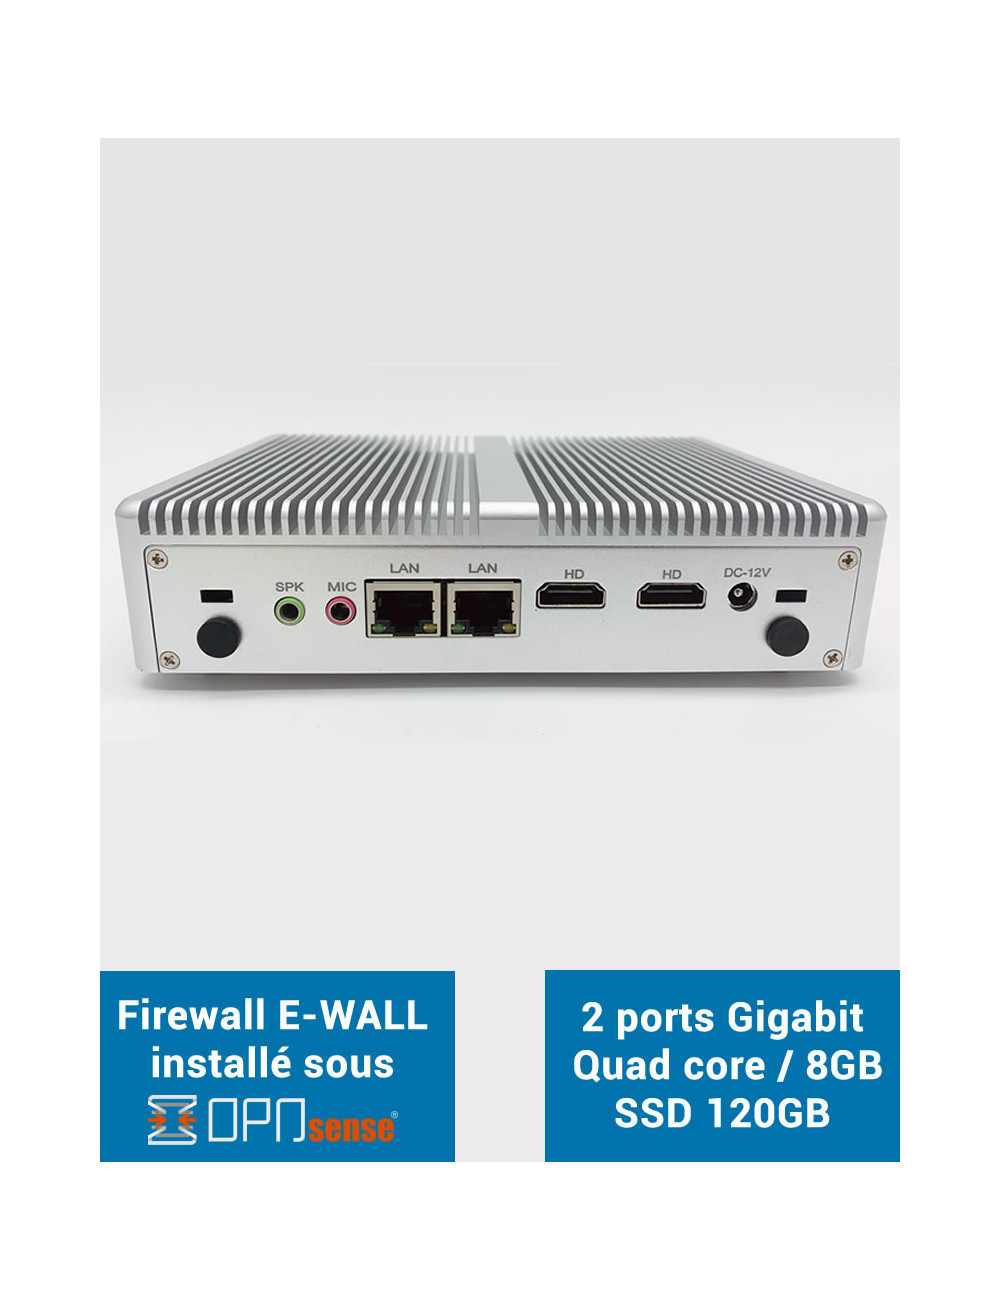 Firewall EG2x under OPNsense® 2 Gigabit ports 8GB SSD 120GB